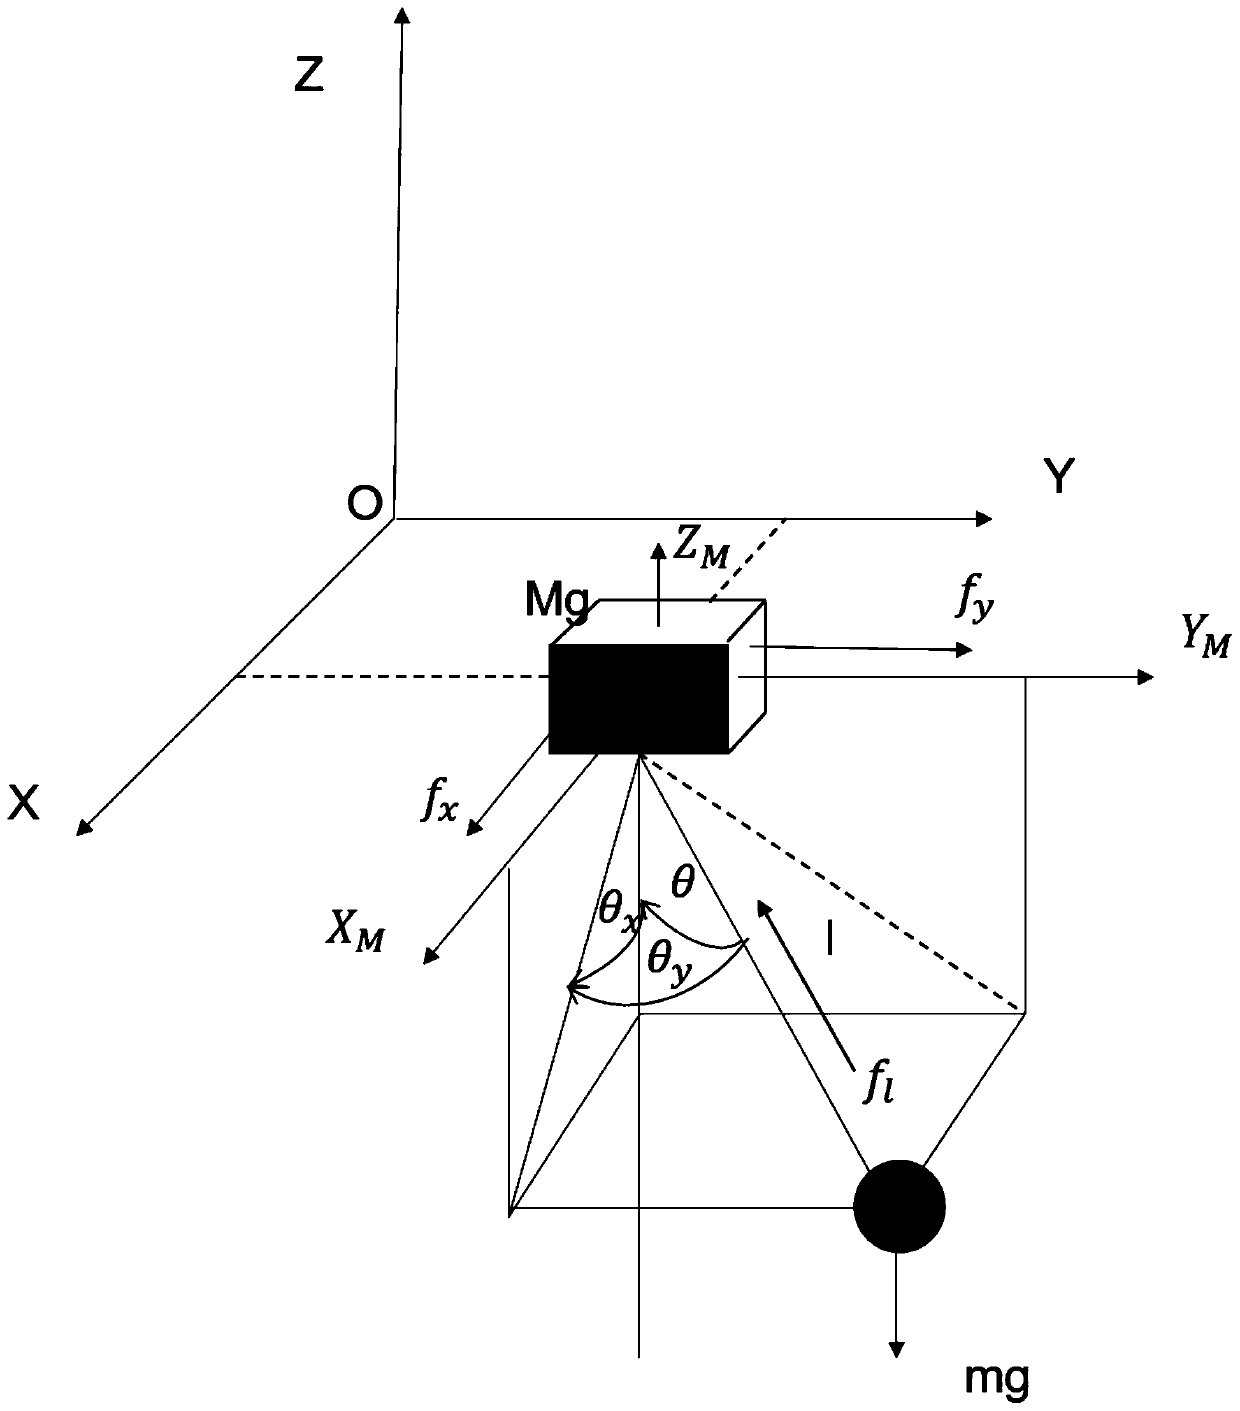 Bridge crane system control method based on sliding mode control theory